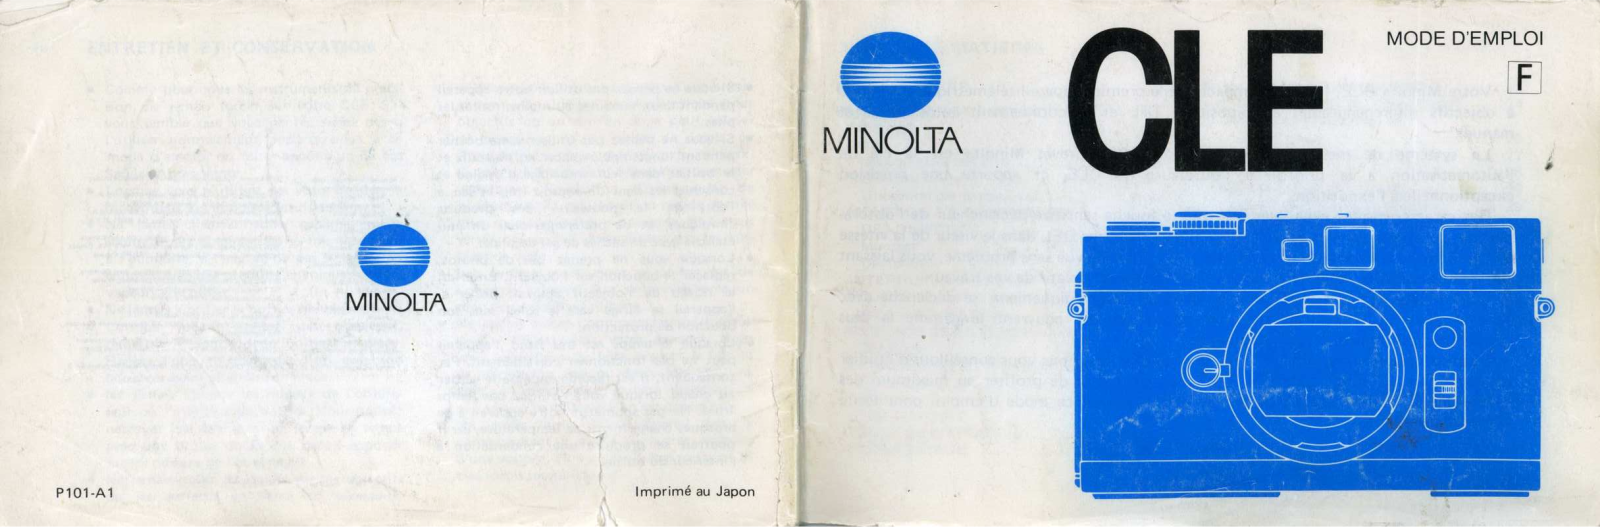 MINOLTA CLE User Manual